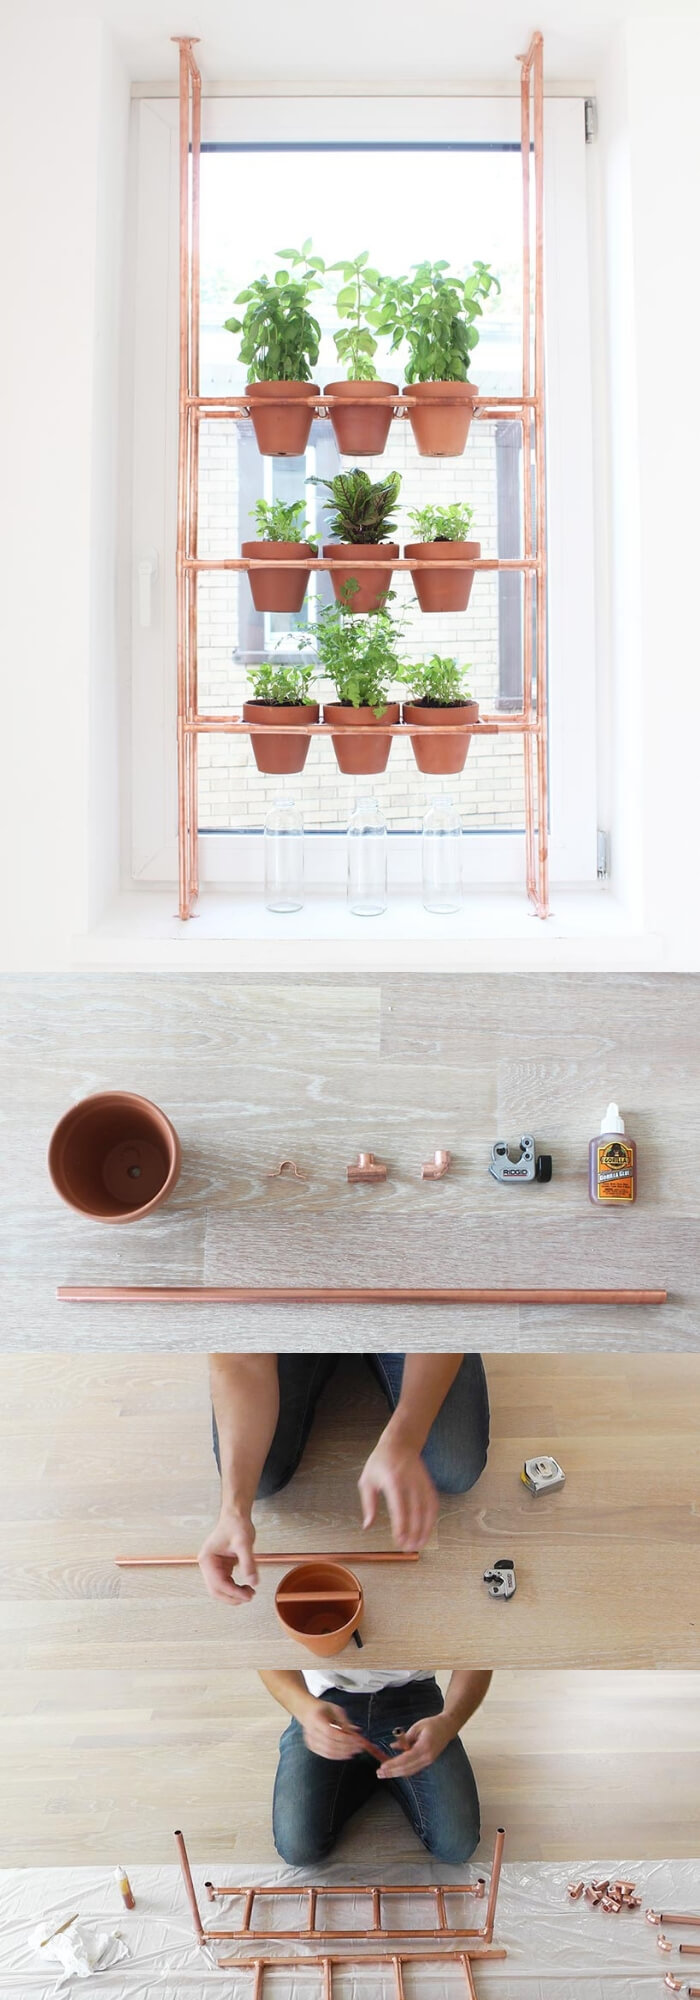 DIY Copper Herb Garden